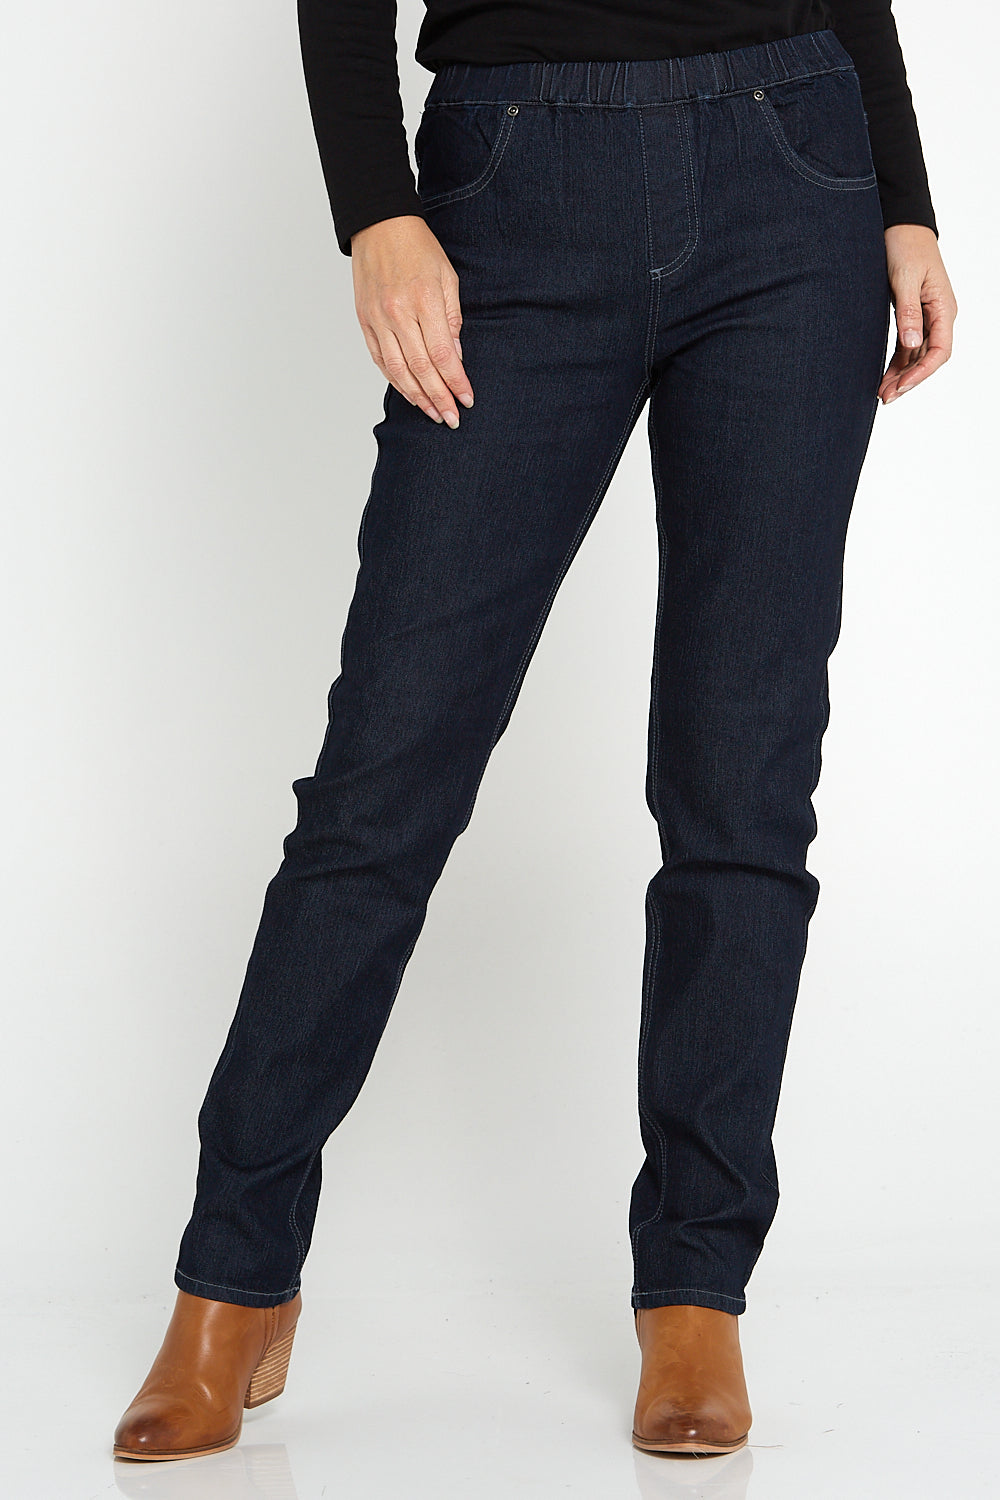 TULIO Mature Fashion  Hillwood Pull On Jeans - Dark Wash